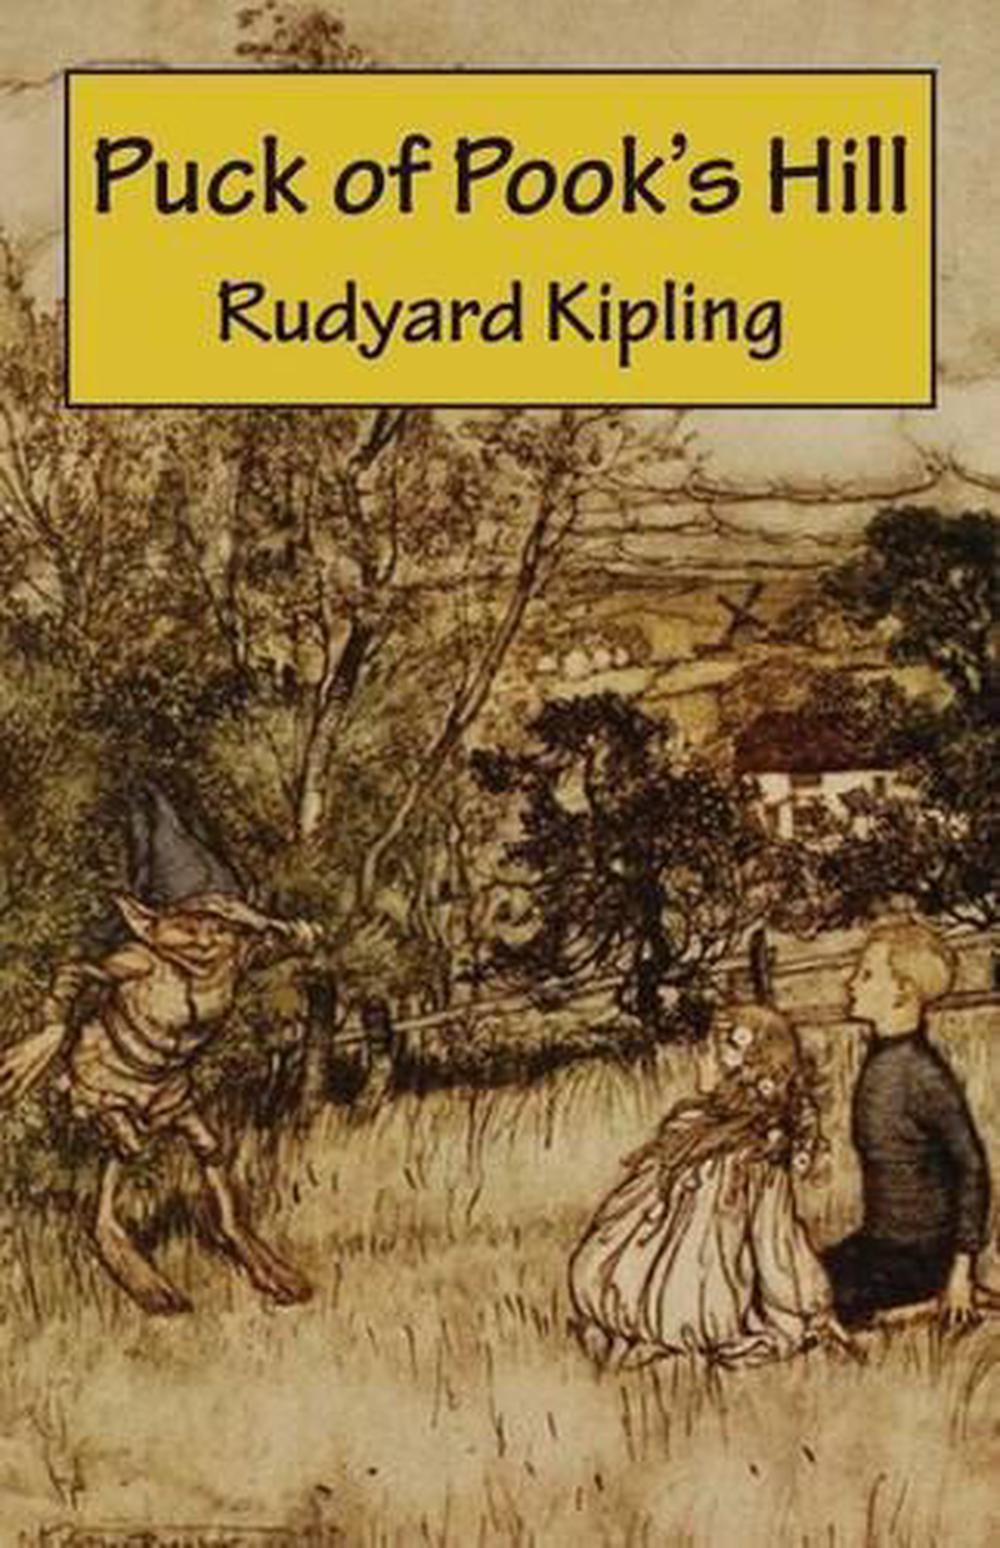 Puck of Pook's Hill by Rudyard Kipling (English) Paperback Book Free ...